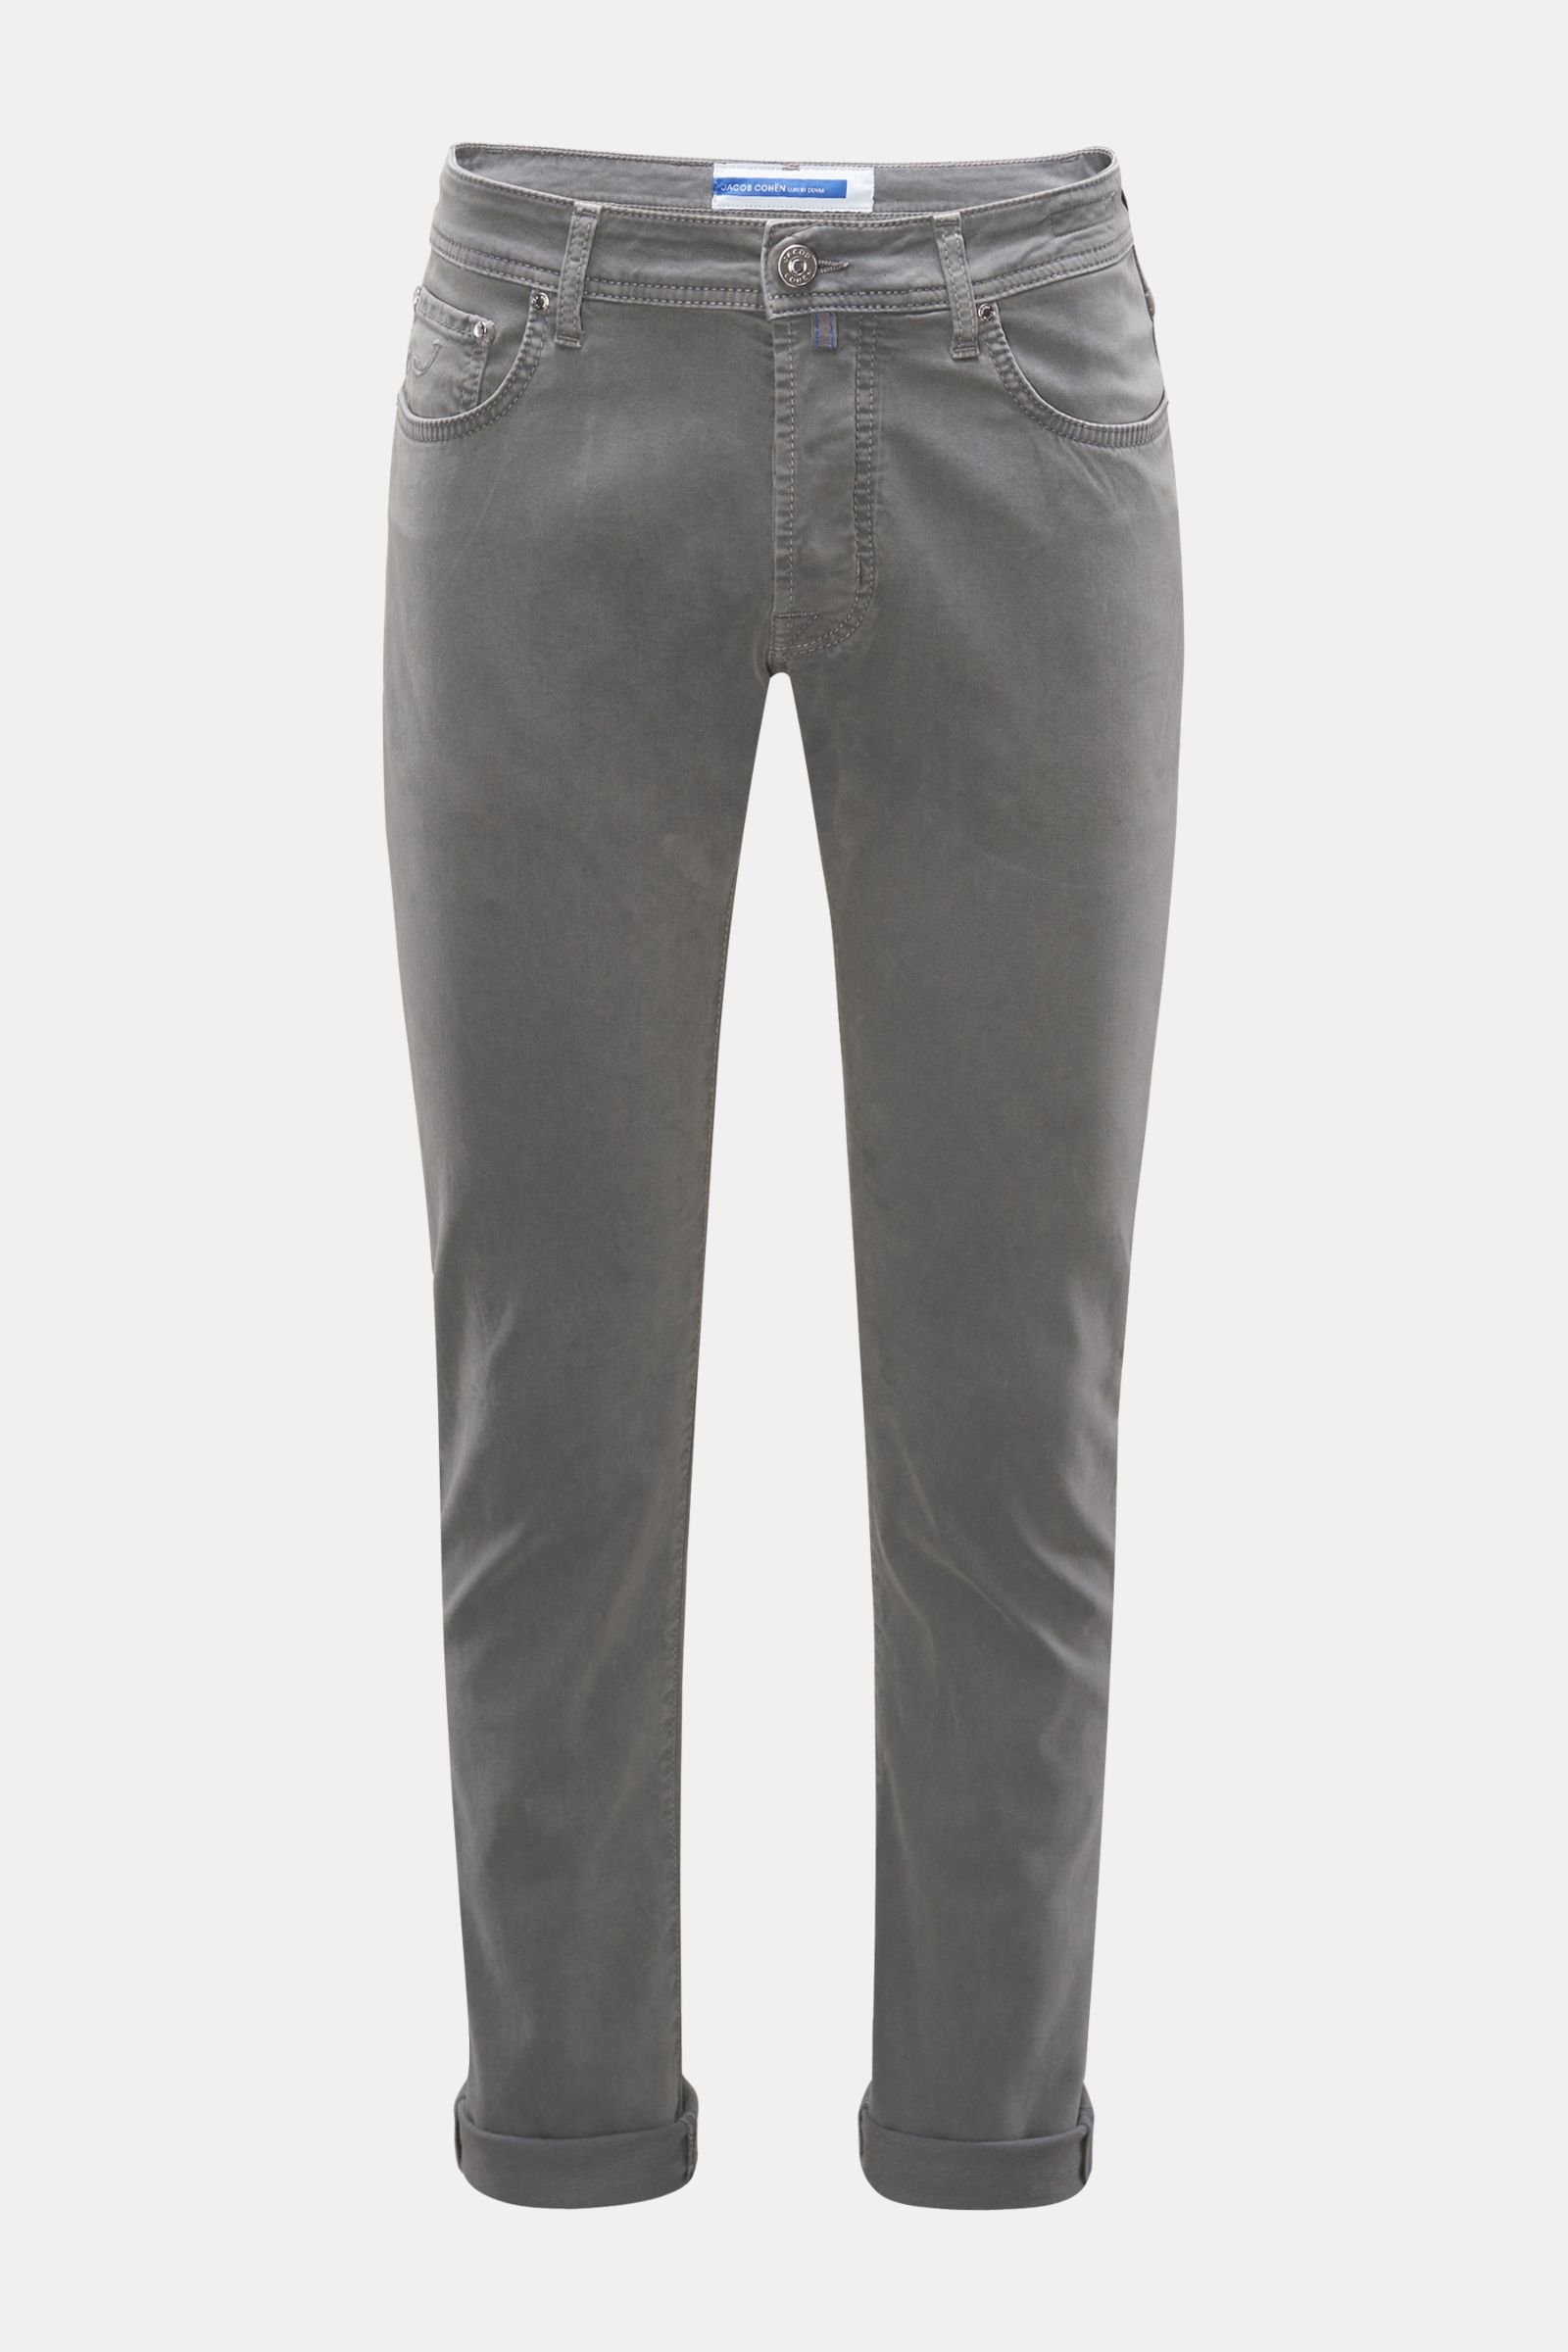 Cotton trousers 'Bard' dark grey (previously J688)